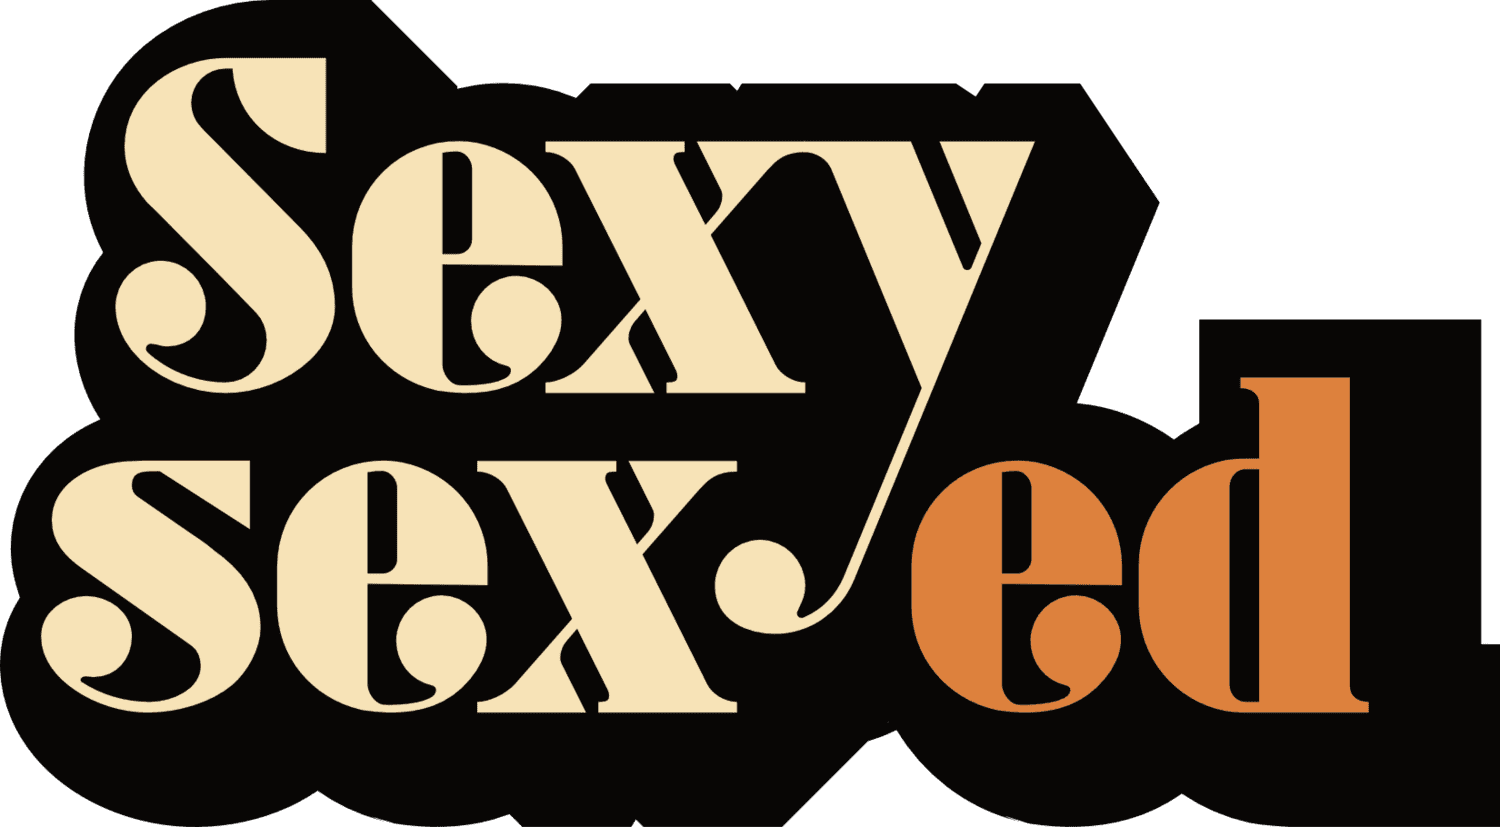 www.sexysexed.org